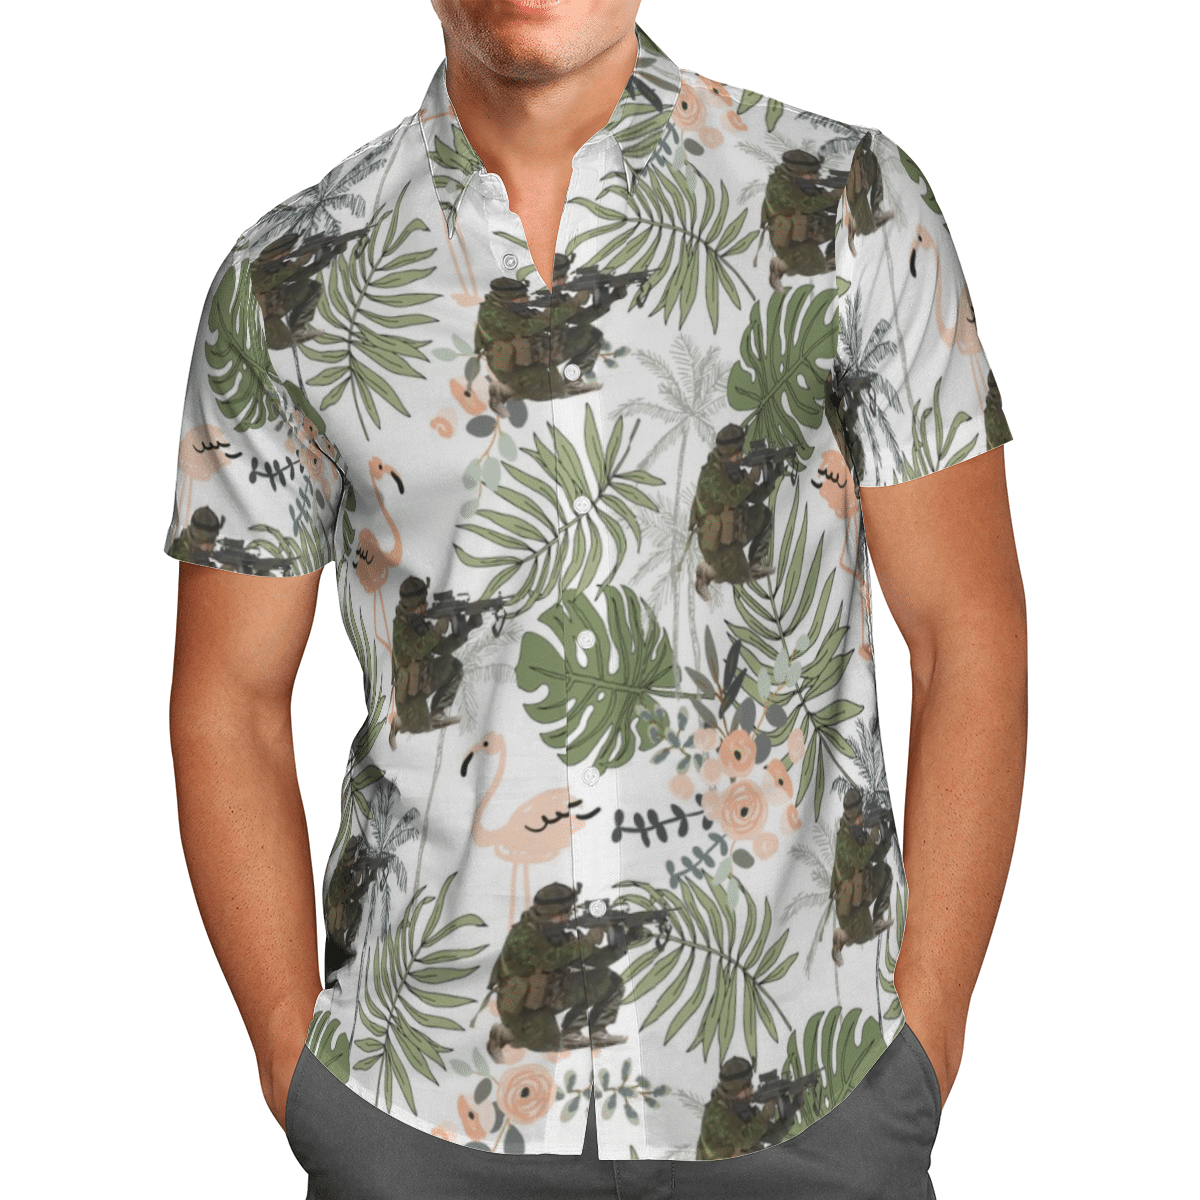 Enjoy your summer with top cool hawaiian shirt below 87